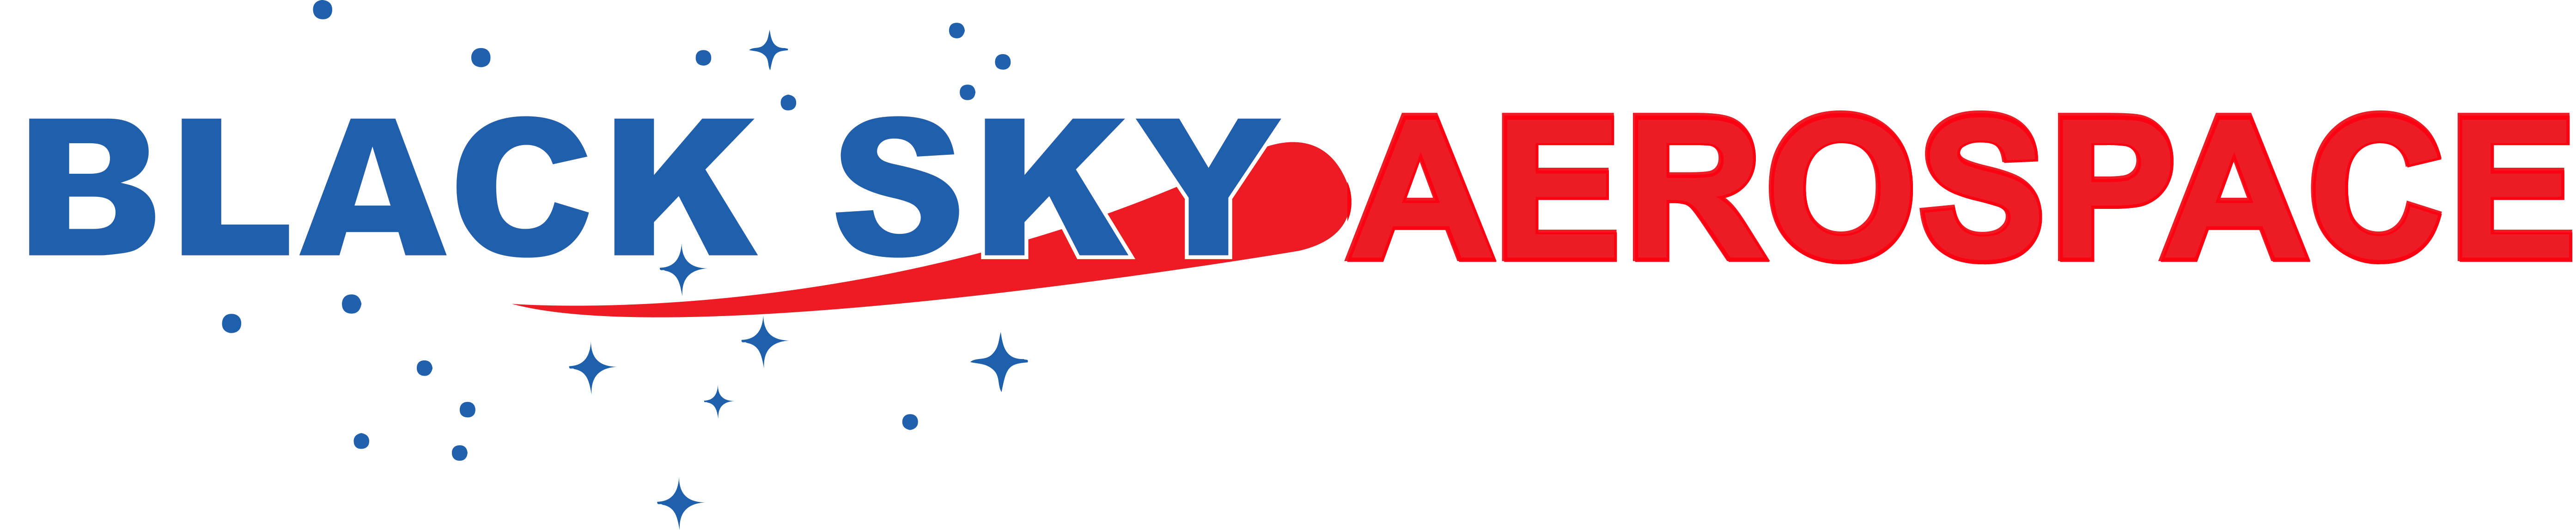 Black Sky Aerospace logo